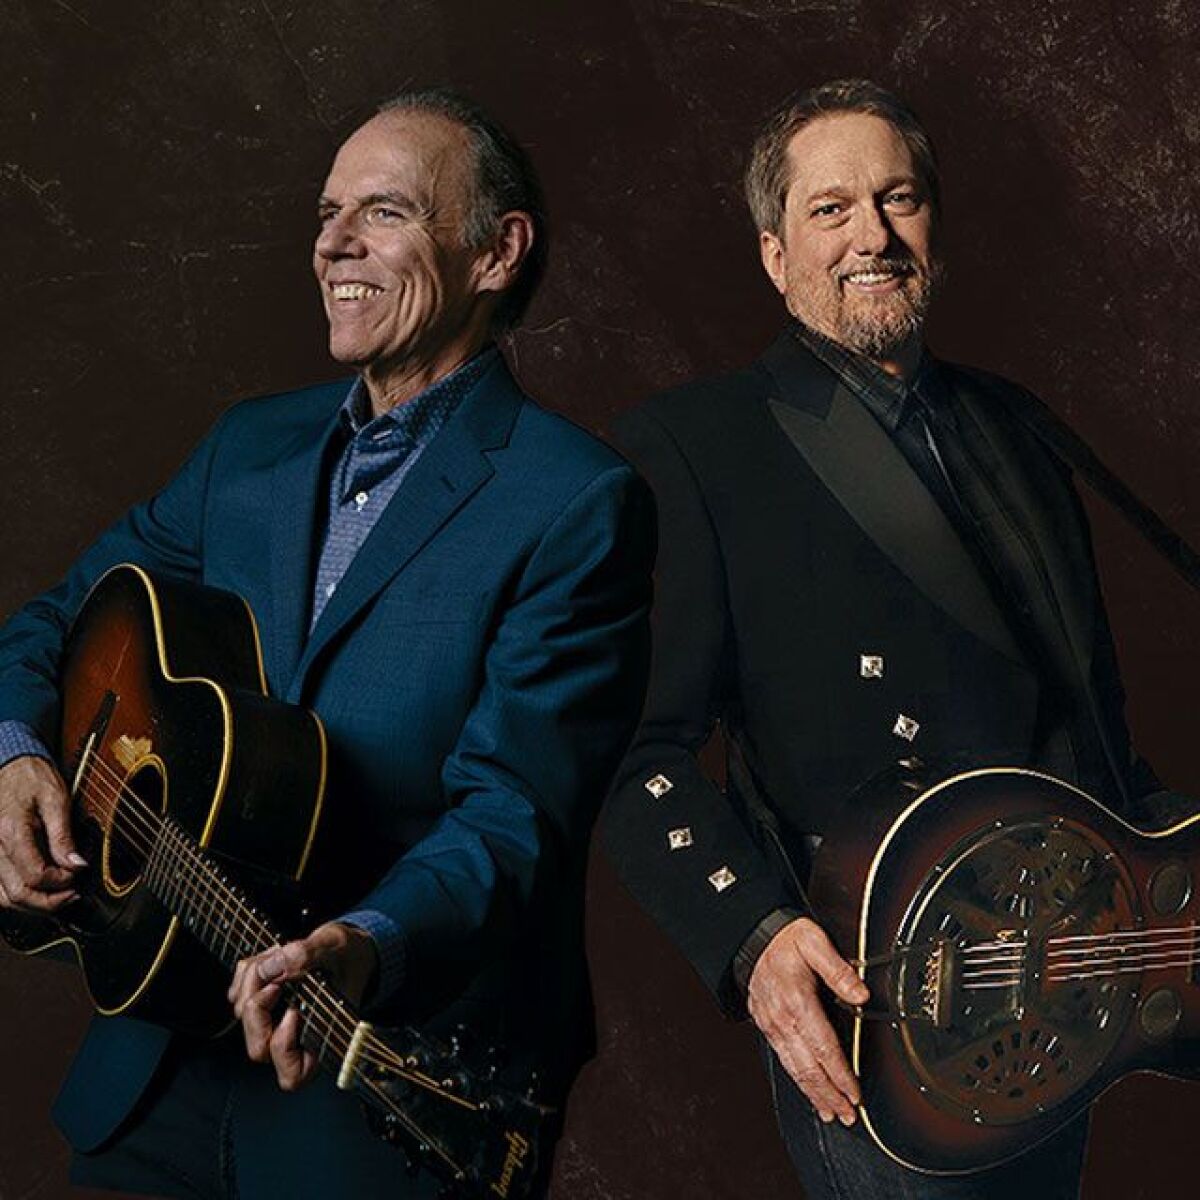 John Hiatt and Jerry Douglas standing side by side, holding guitars